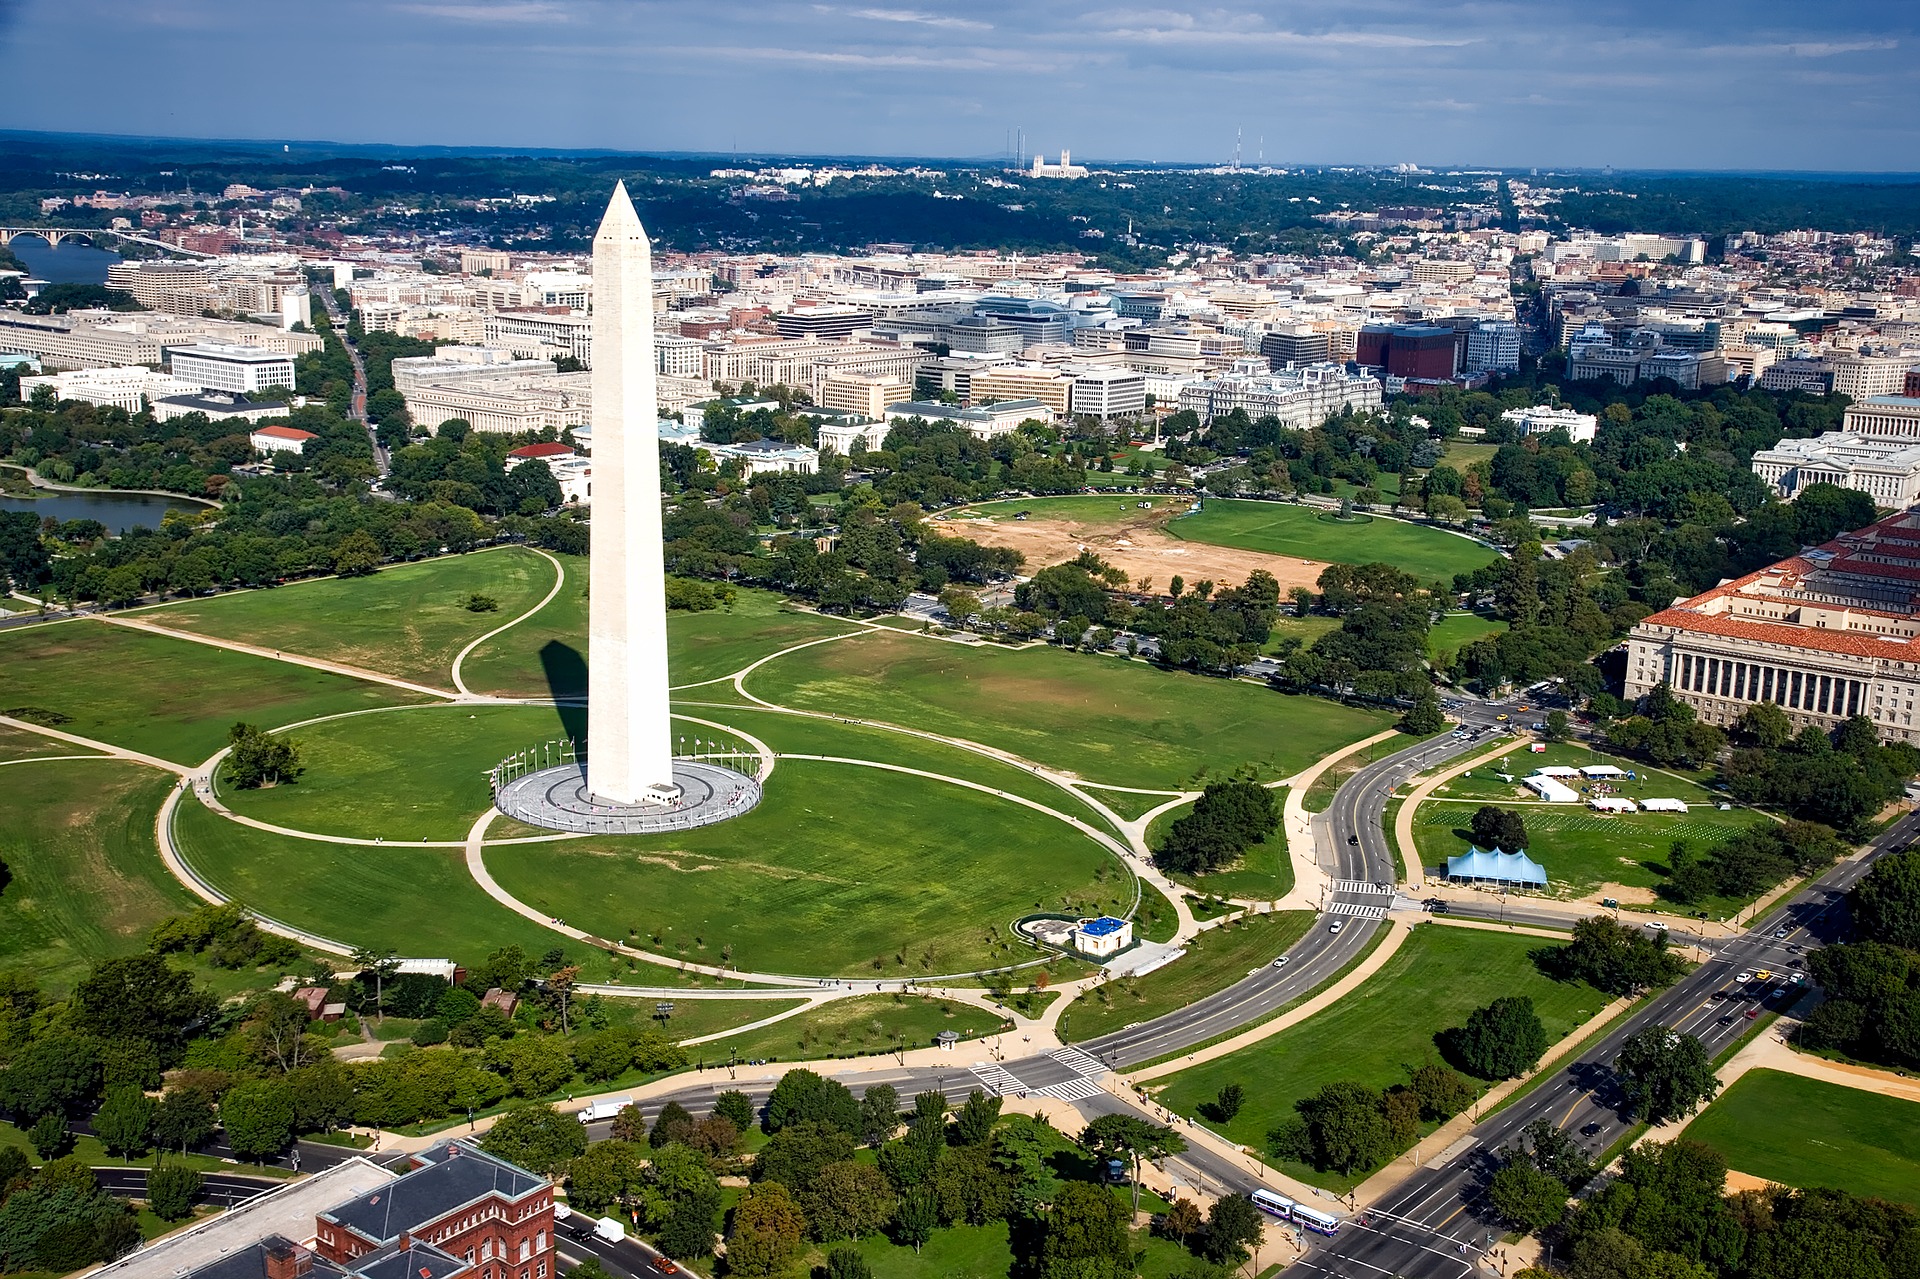 Washington Monument, Washington, DC, USA